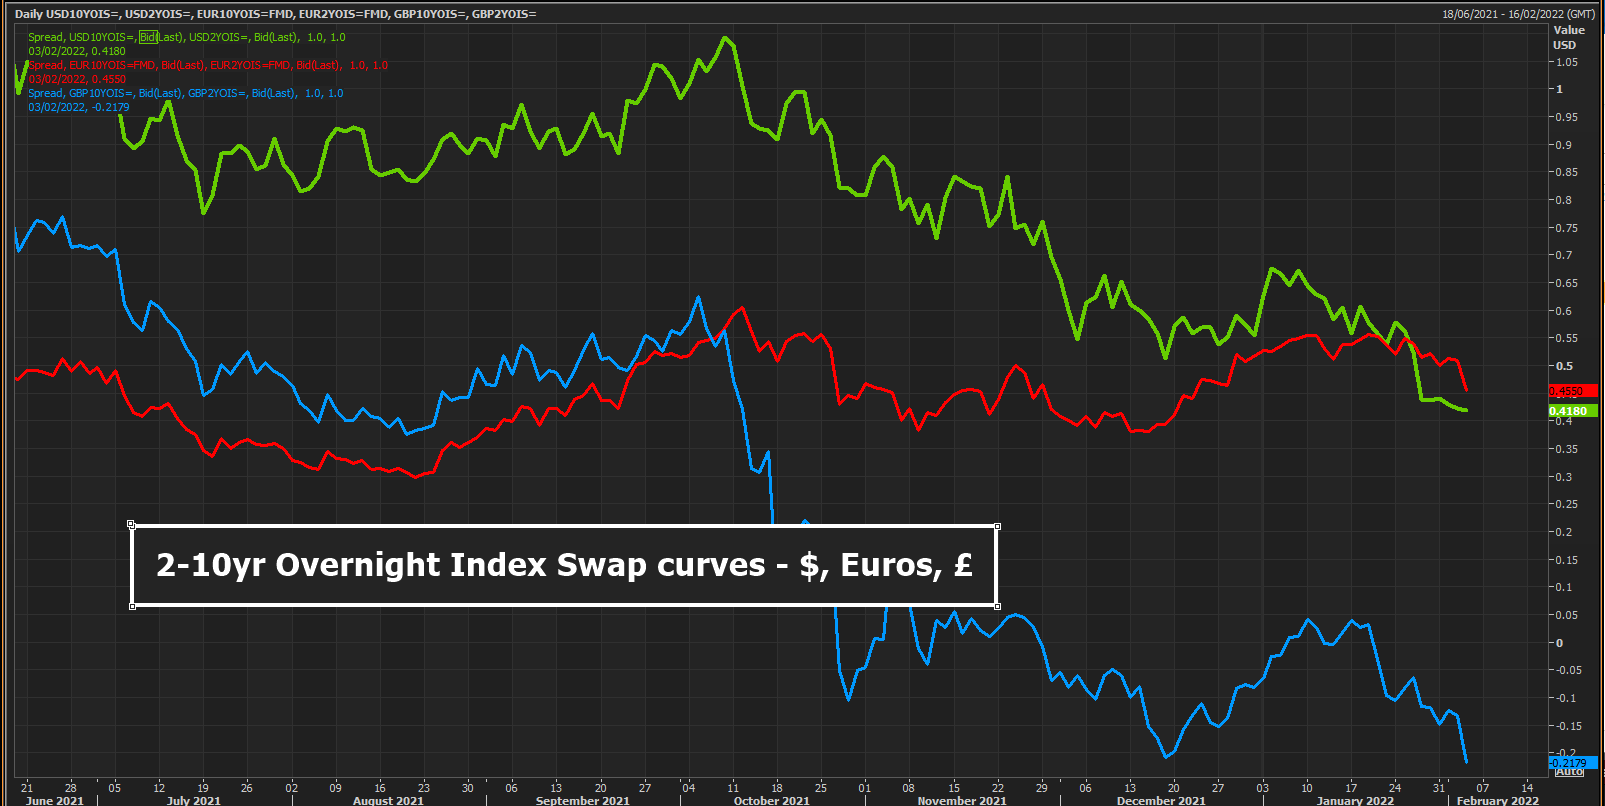 US, UK, Eurozone 2-10yr Yield Curves